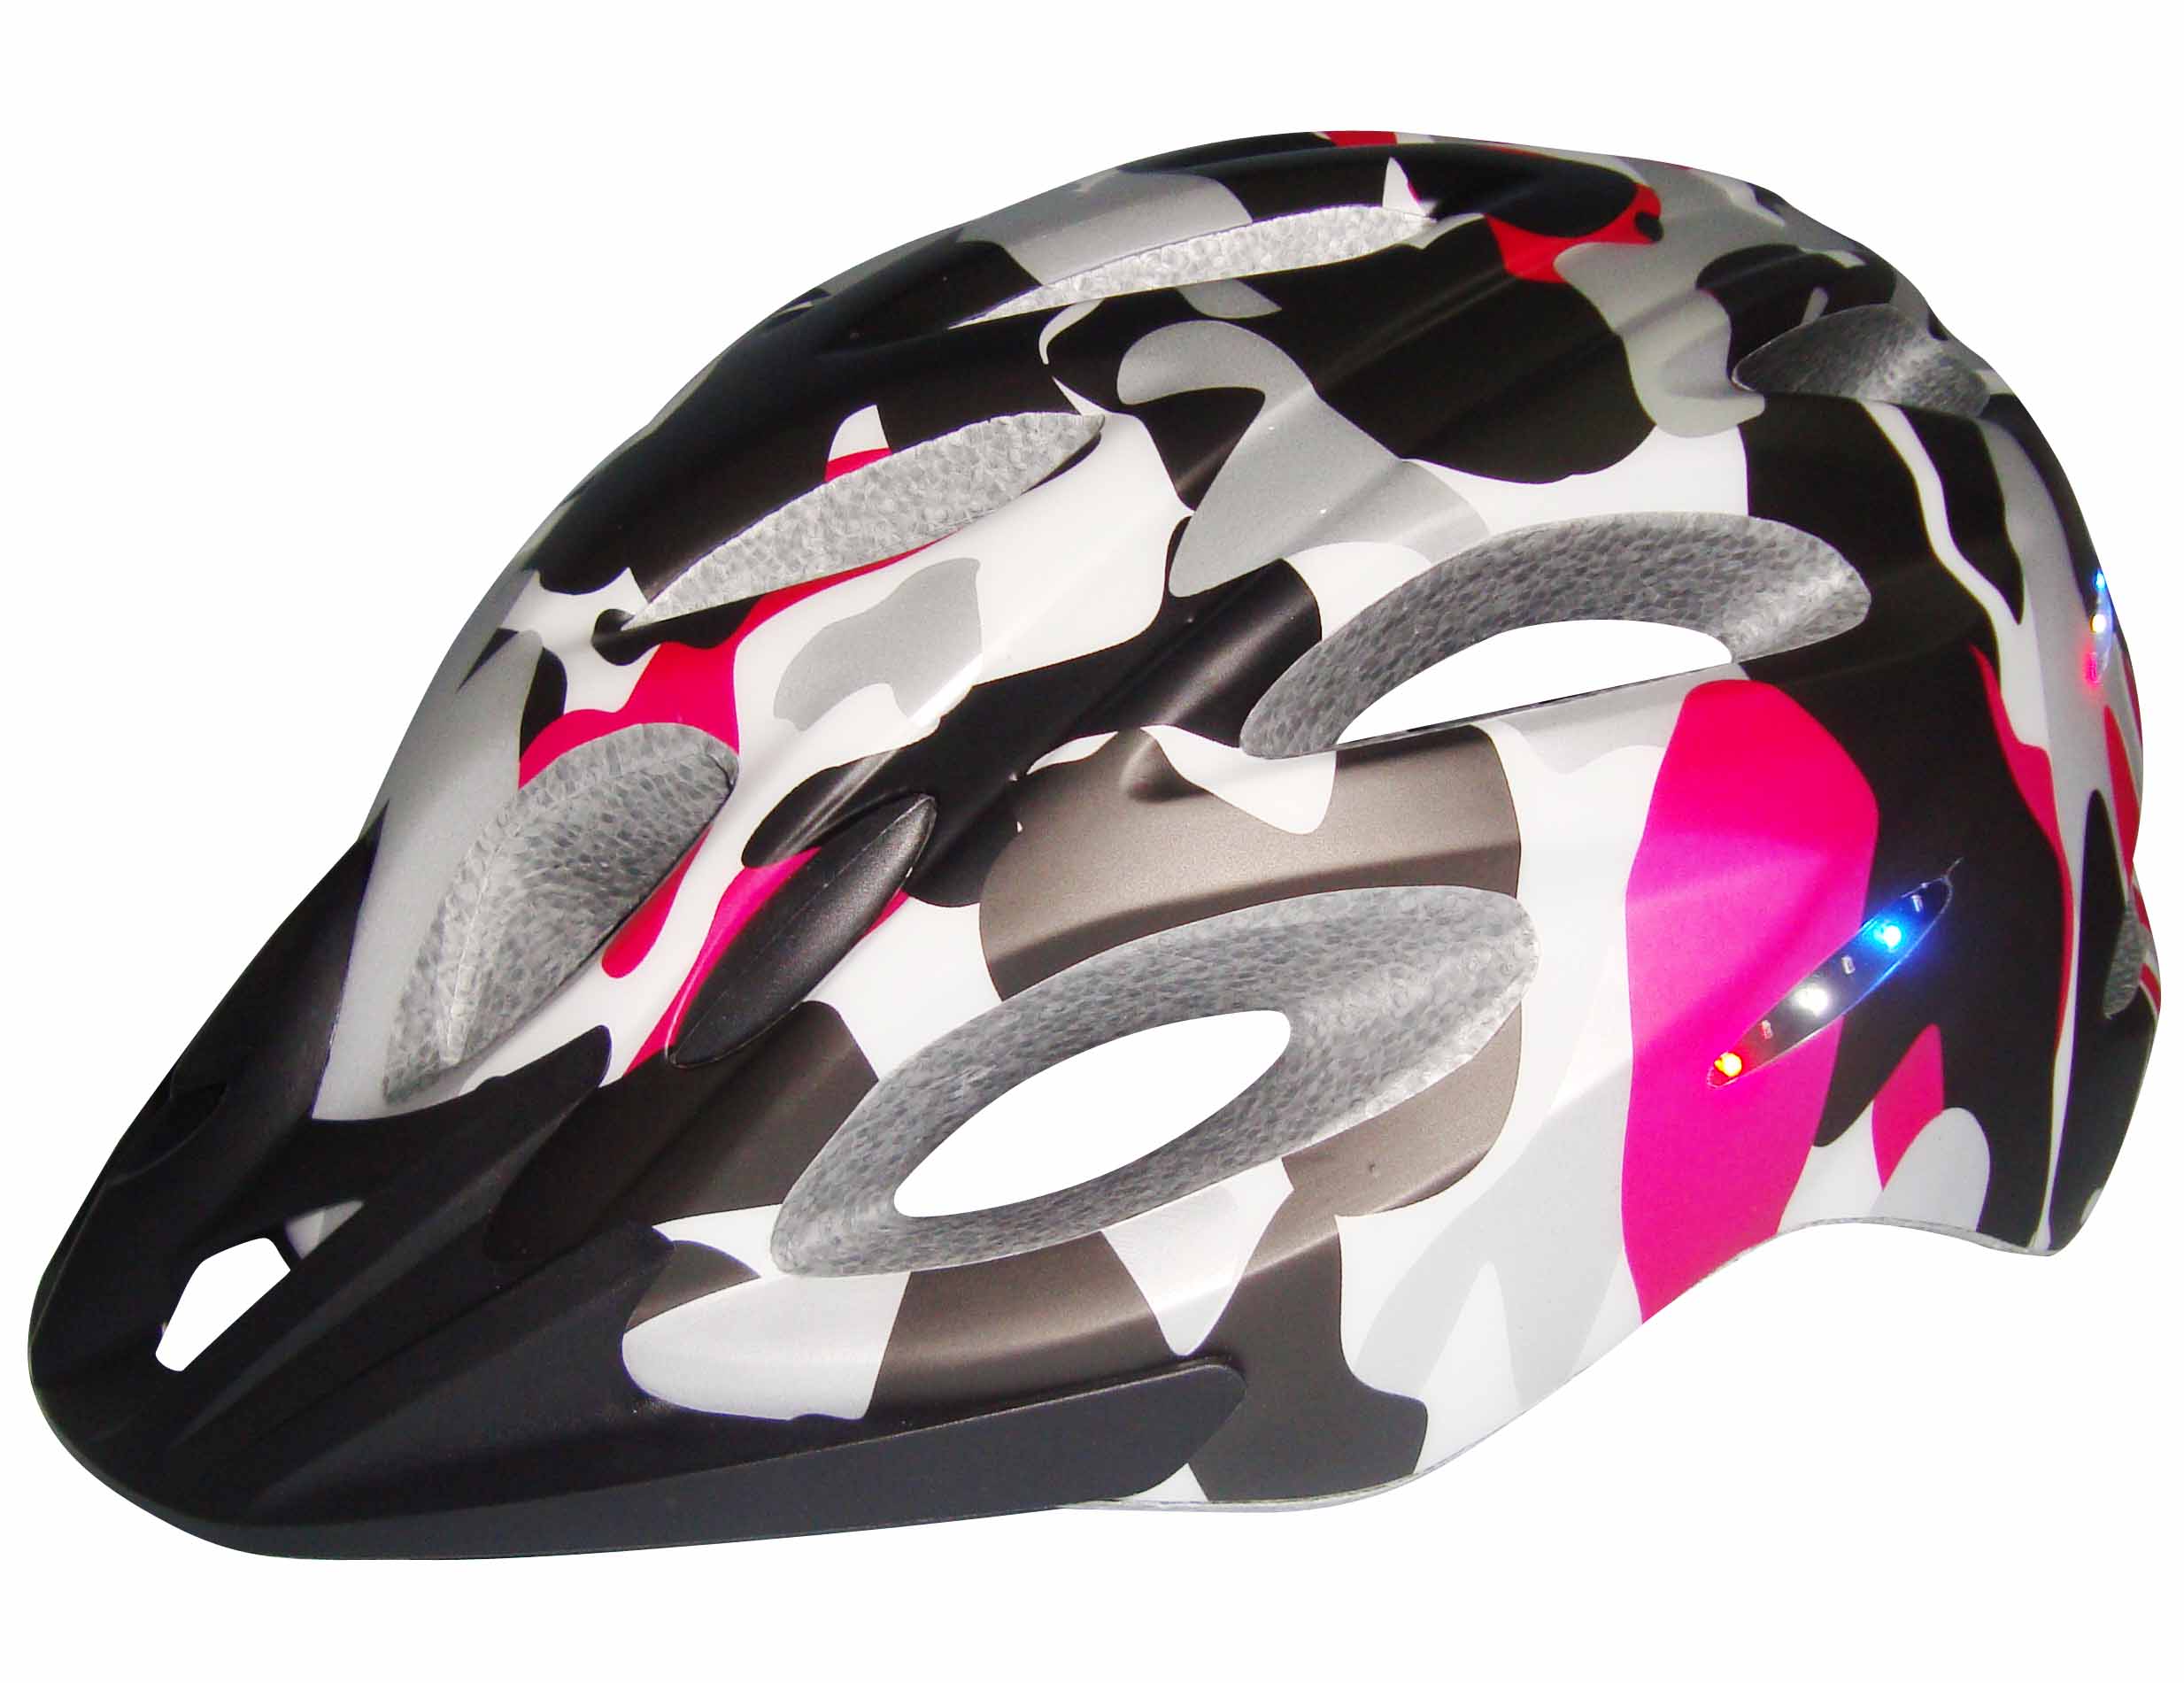 Certyfikat CE Certified Mountain Bike Helmet Light, Best Helmet Light Interngrated AU-L01